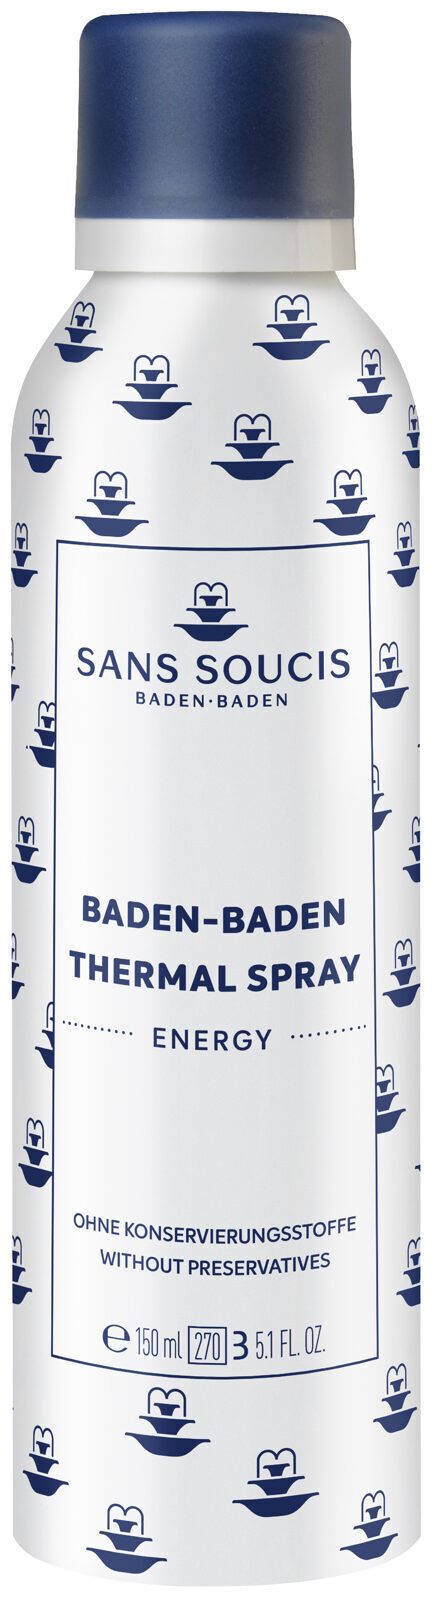 BADEN-BADEN THERMAL SPRAY • 150ML